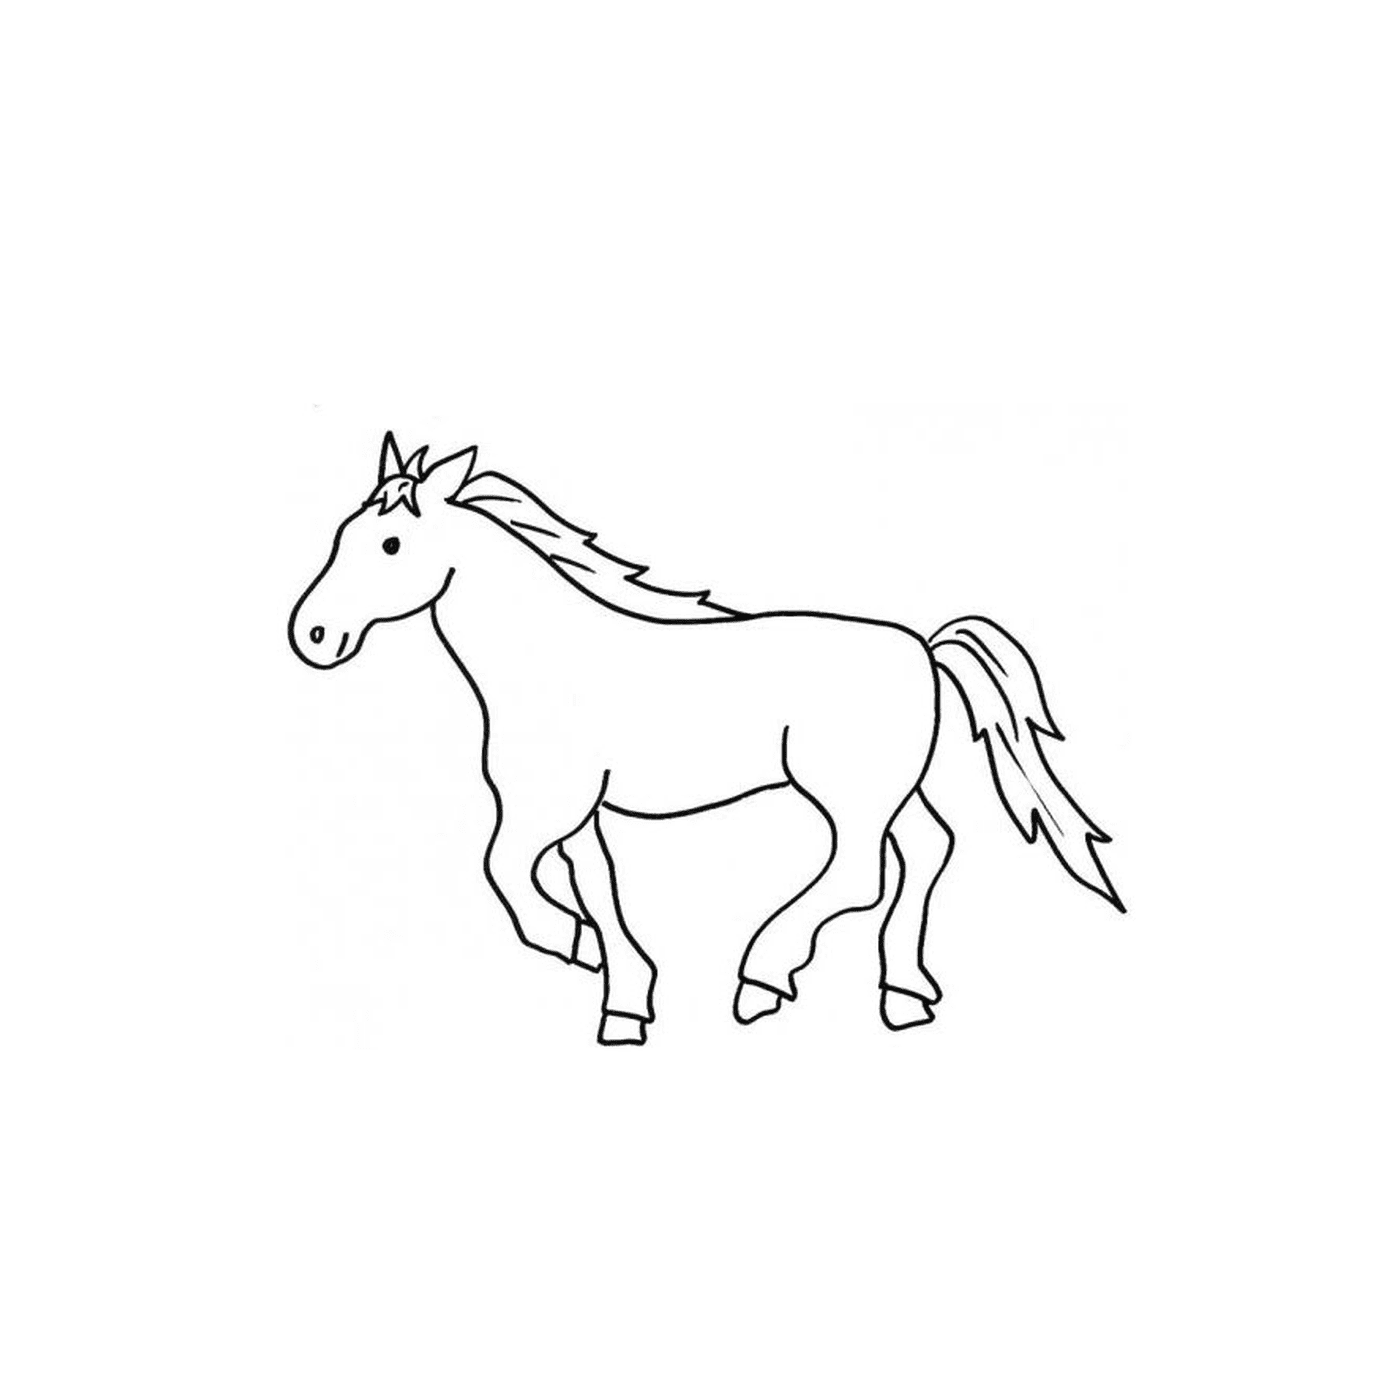  Arab horse standing in a field 